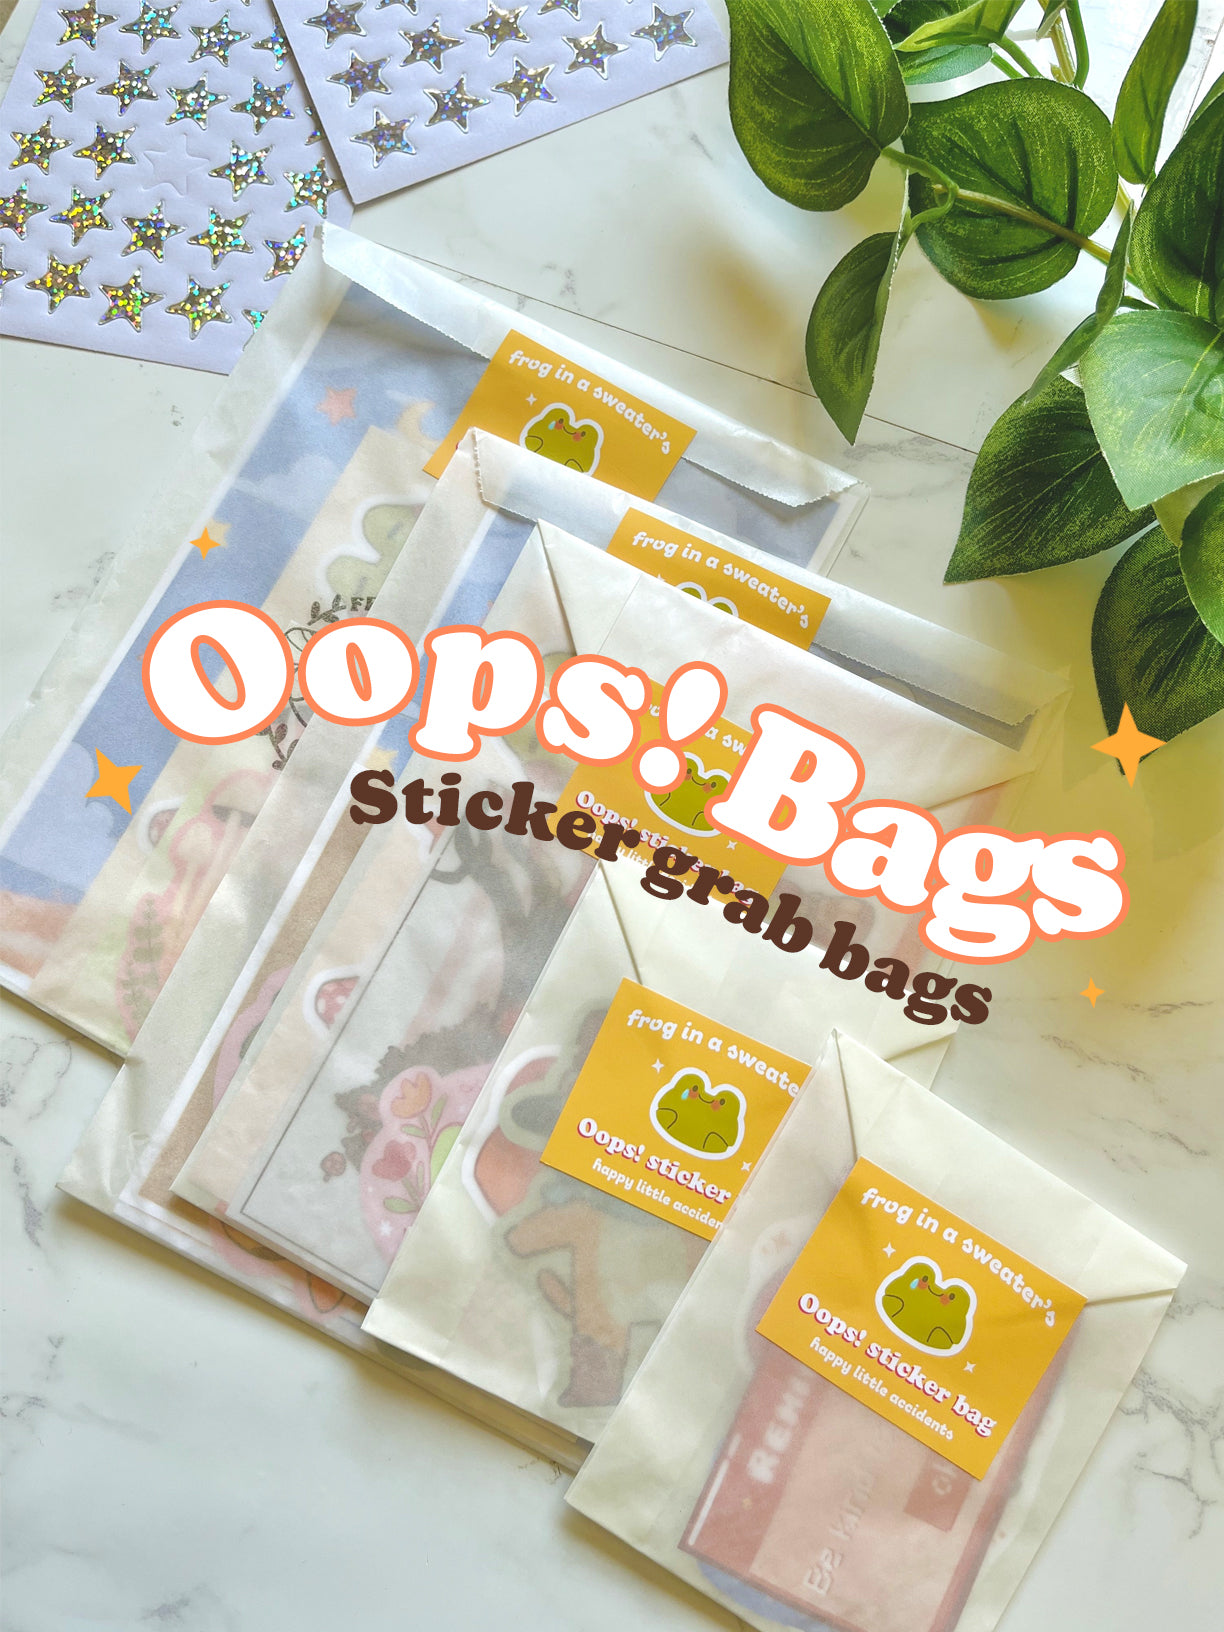 Oops! Sticker Bags